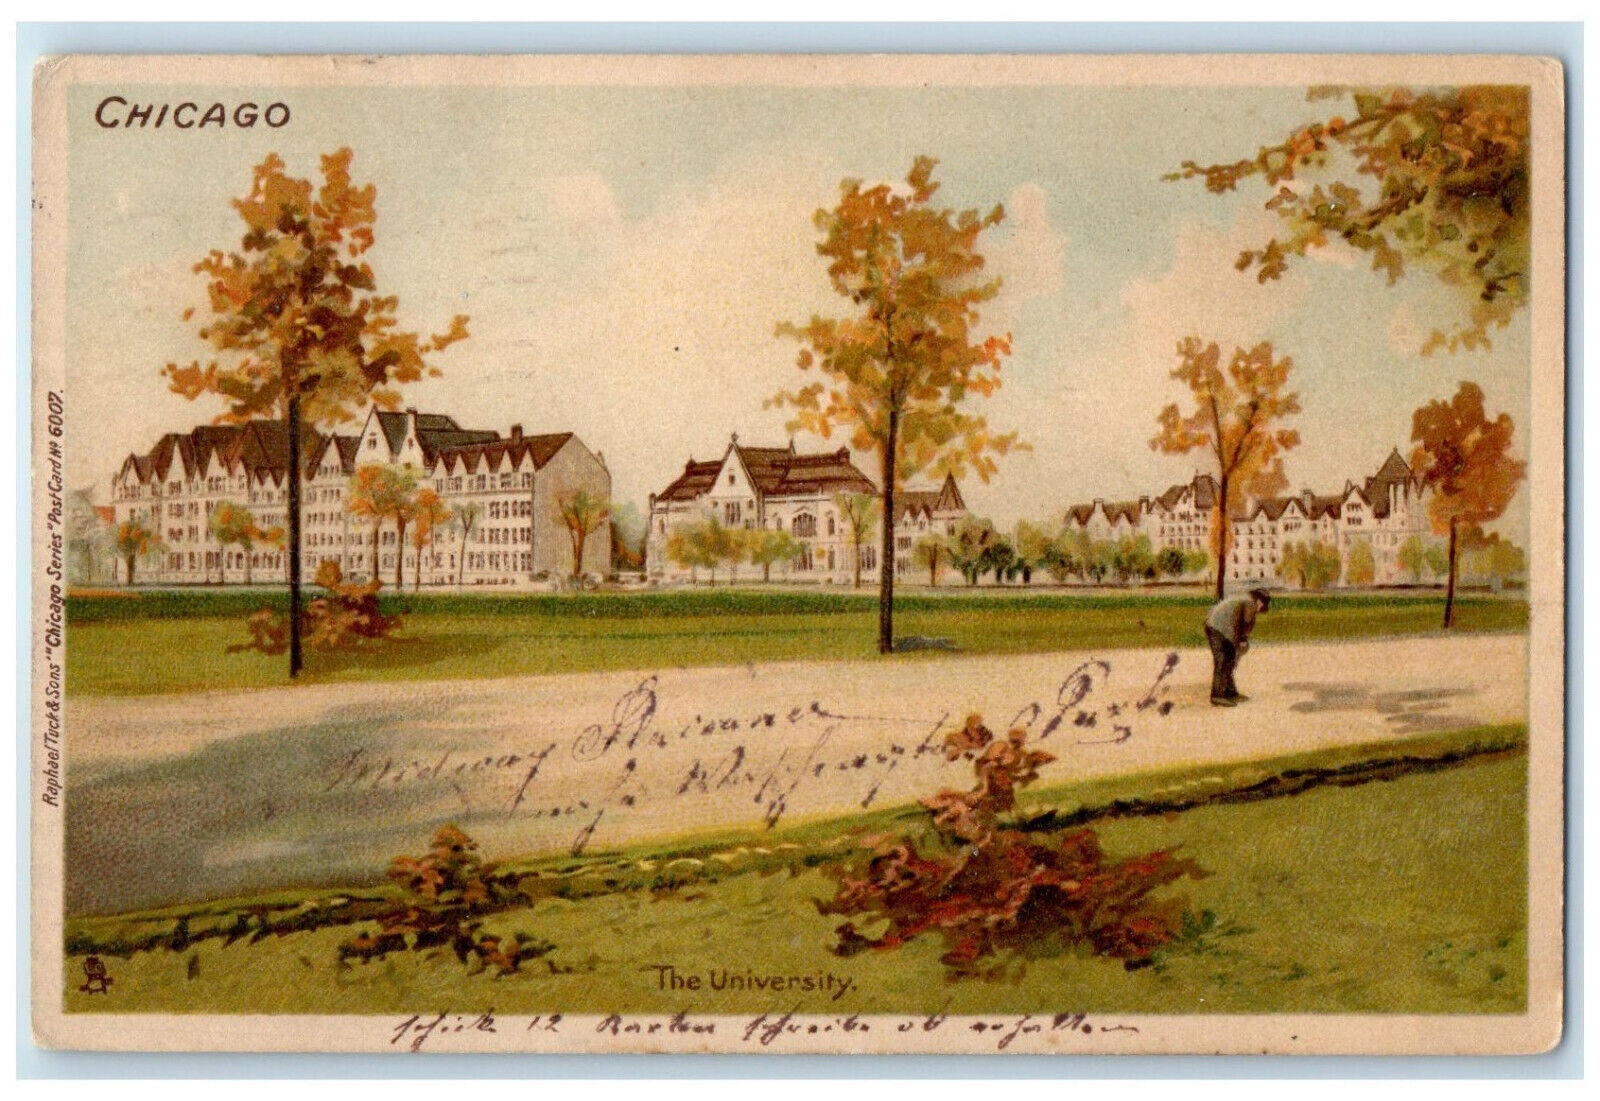 1905 The University Chicago Illinois IL Chicago Series Tuck Art Antique Postcard